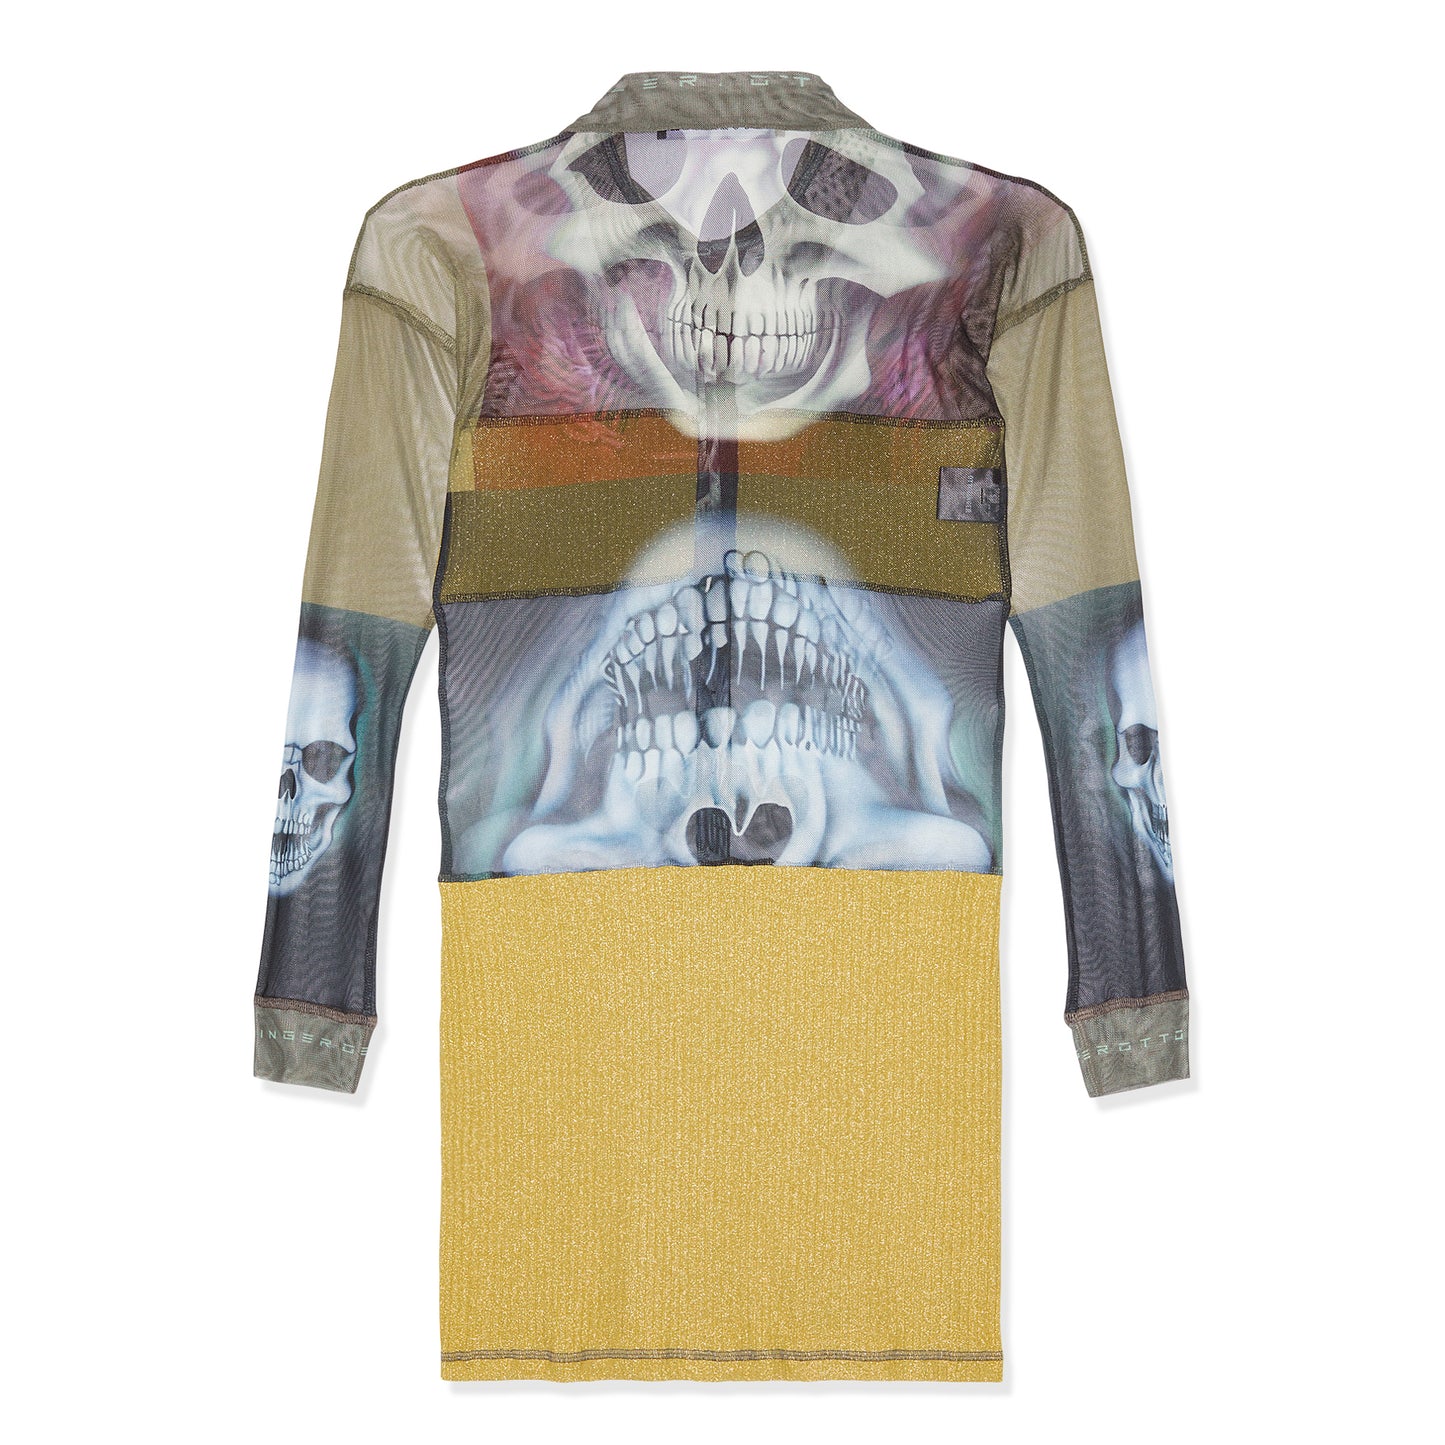 Ottolinger x Tomorrow Mesh Shirt Dress (Skull Print)